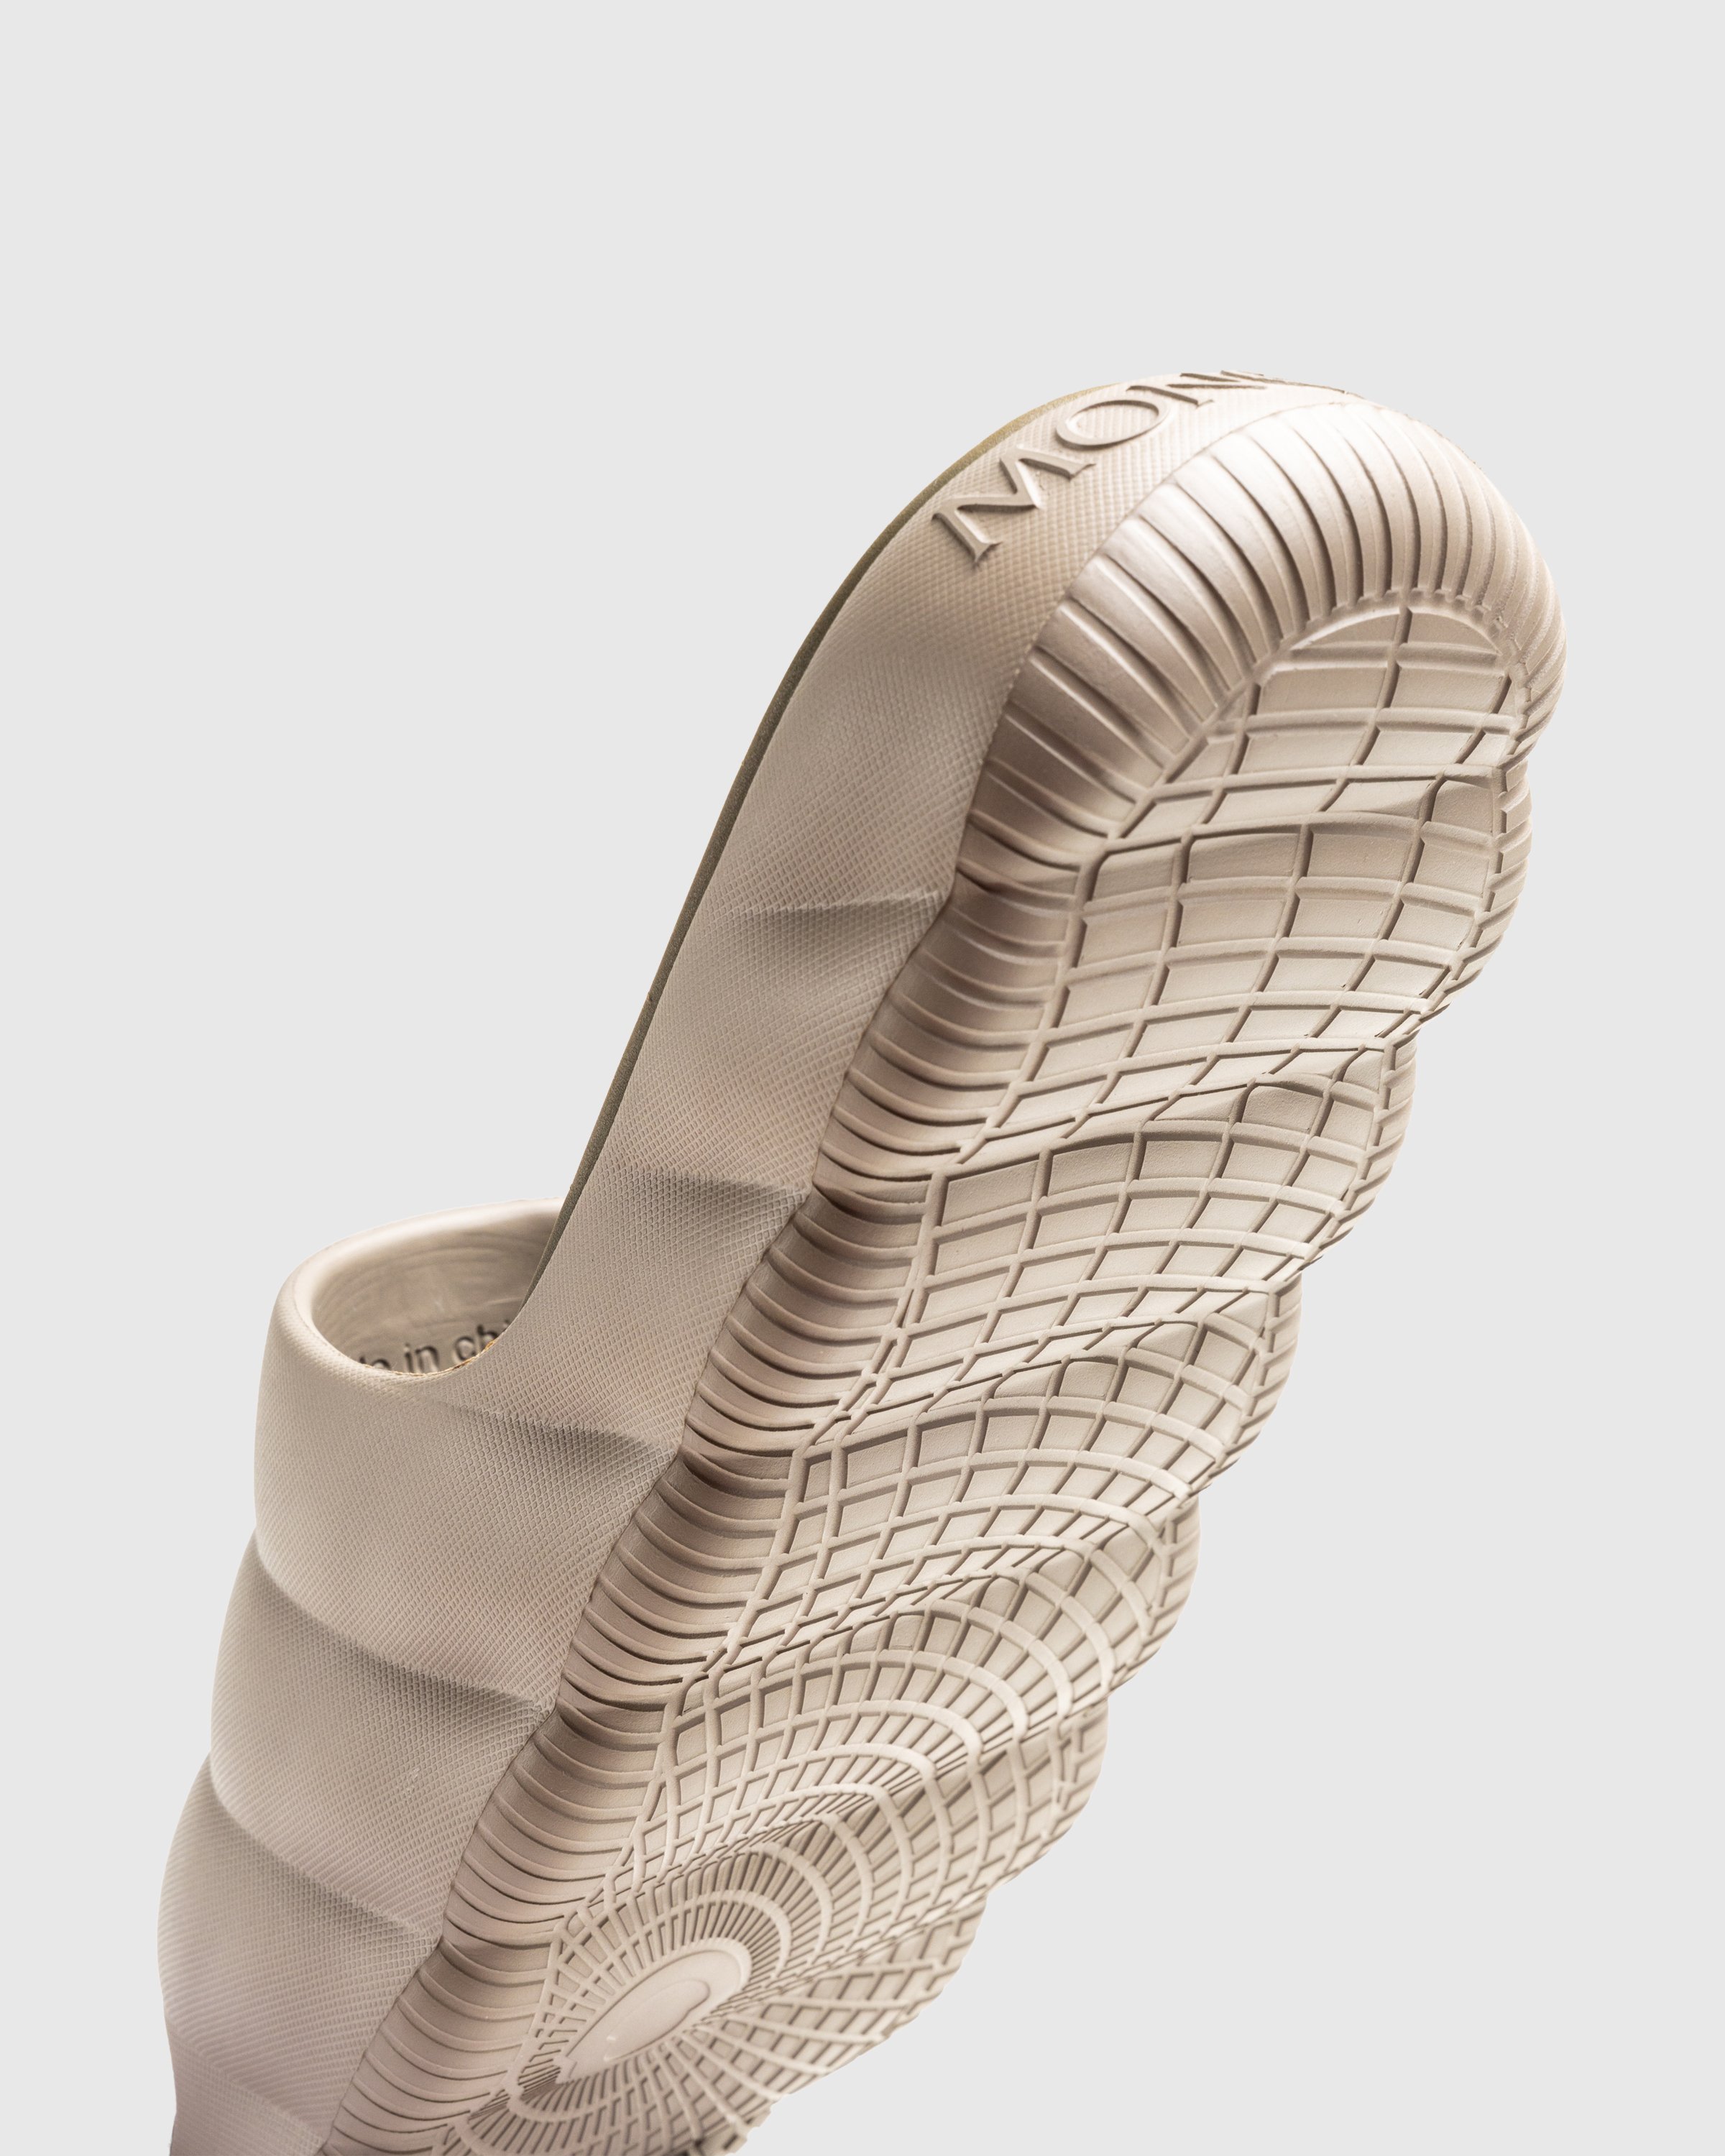 Moncler - LILO SLIDES IVORY - Footwear - White - Image 6